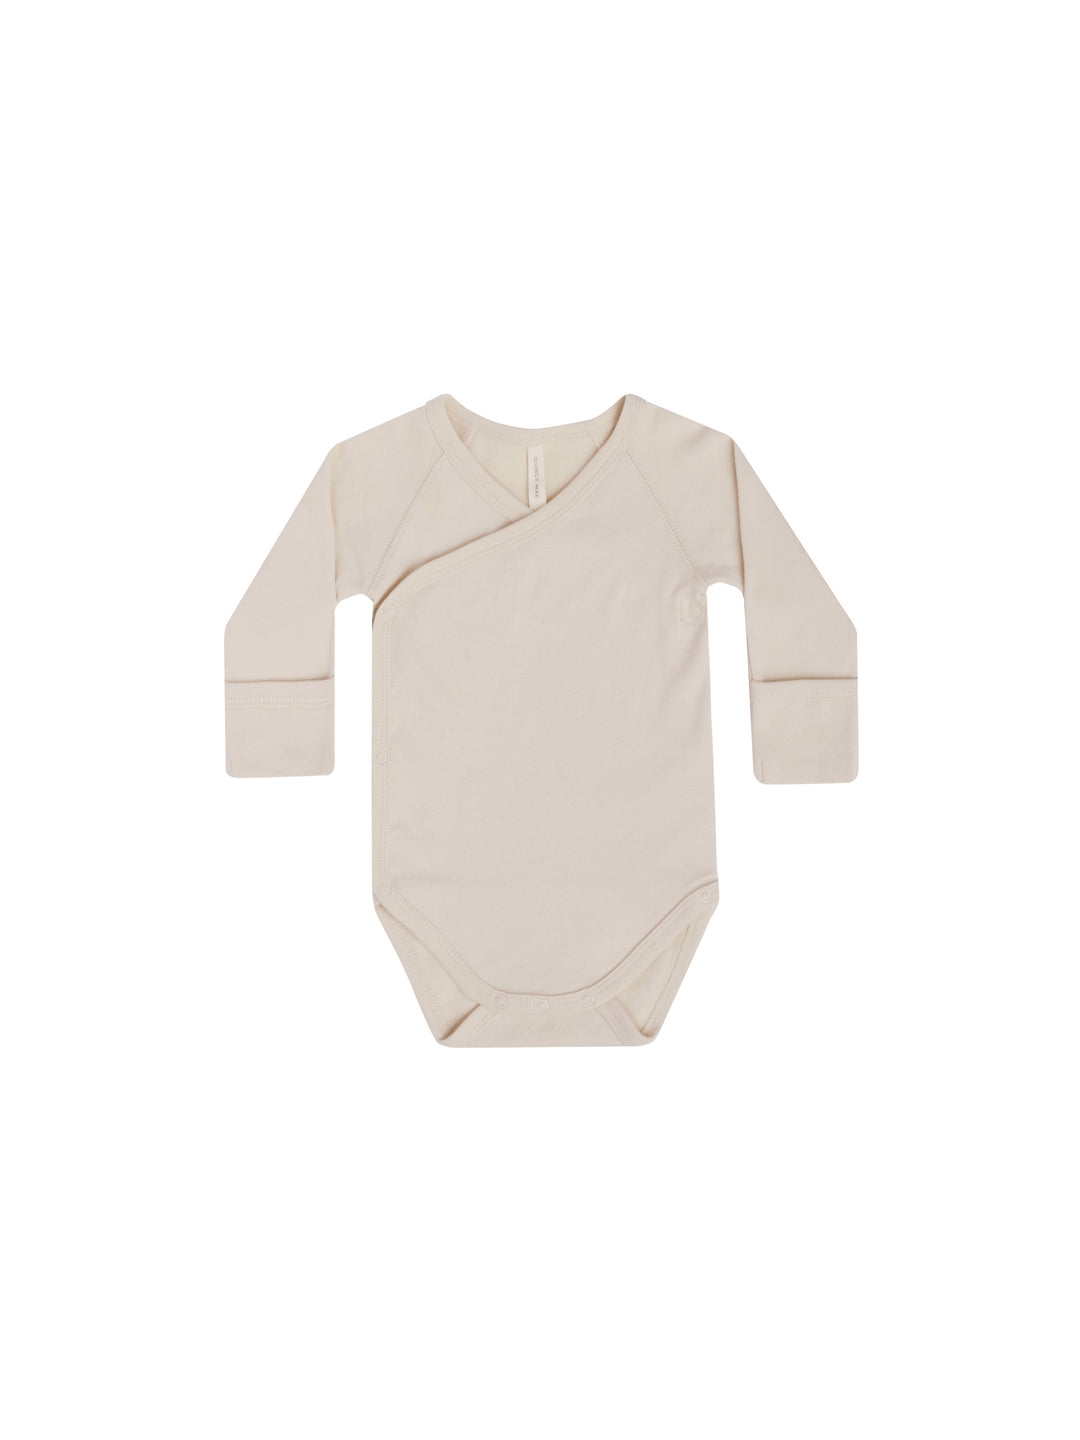 Quincy Mae Side Snap Bodysuit, Natural |Mockingbird Baby & Kids